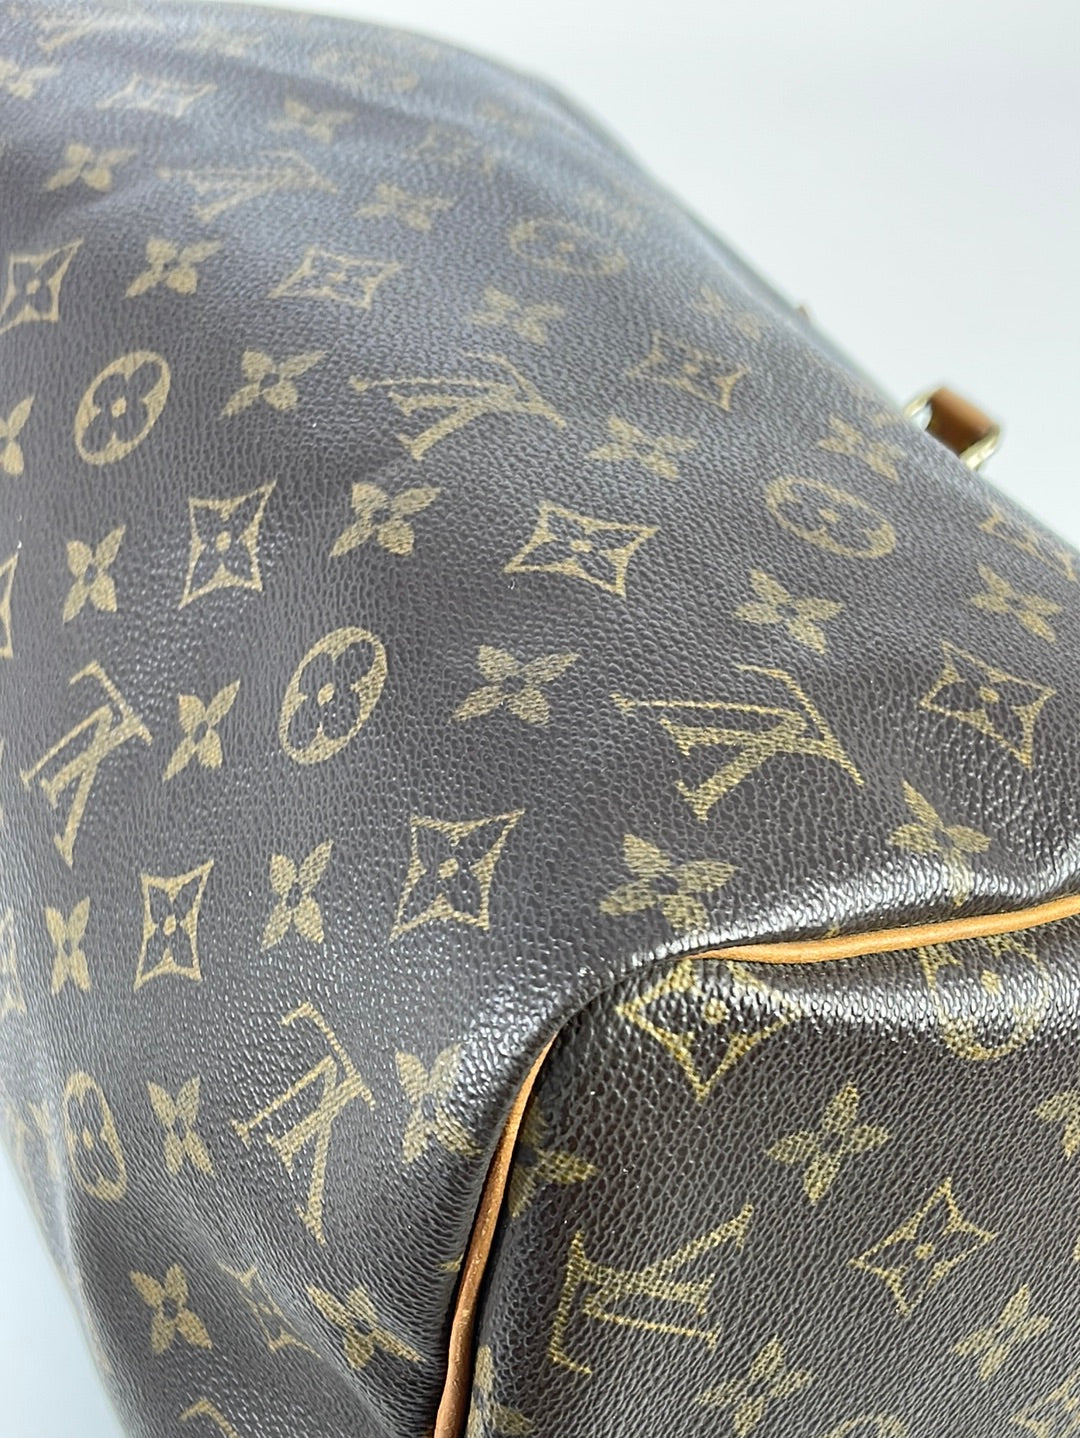 Vintage Louis Vuitton Monogram Speedy 30 Handbag TH0023 051023